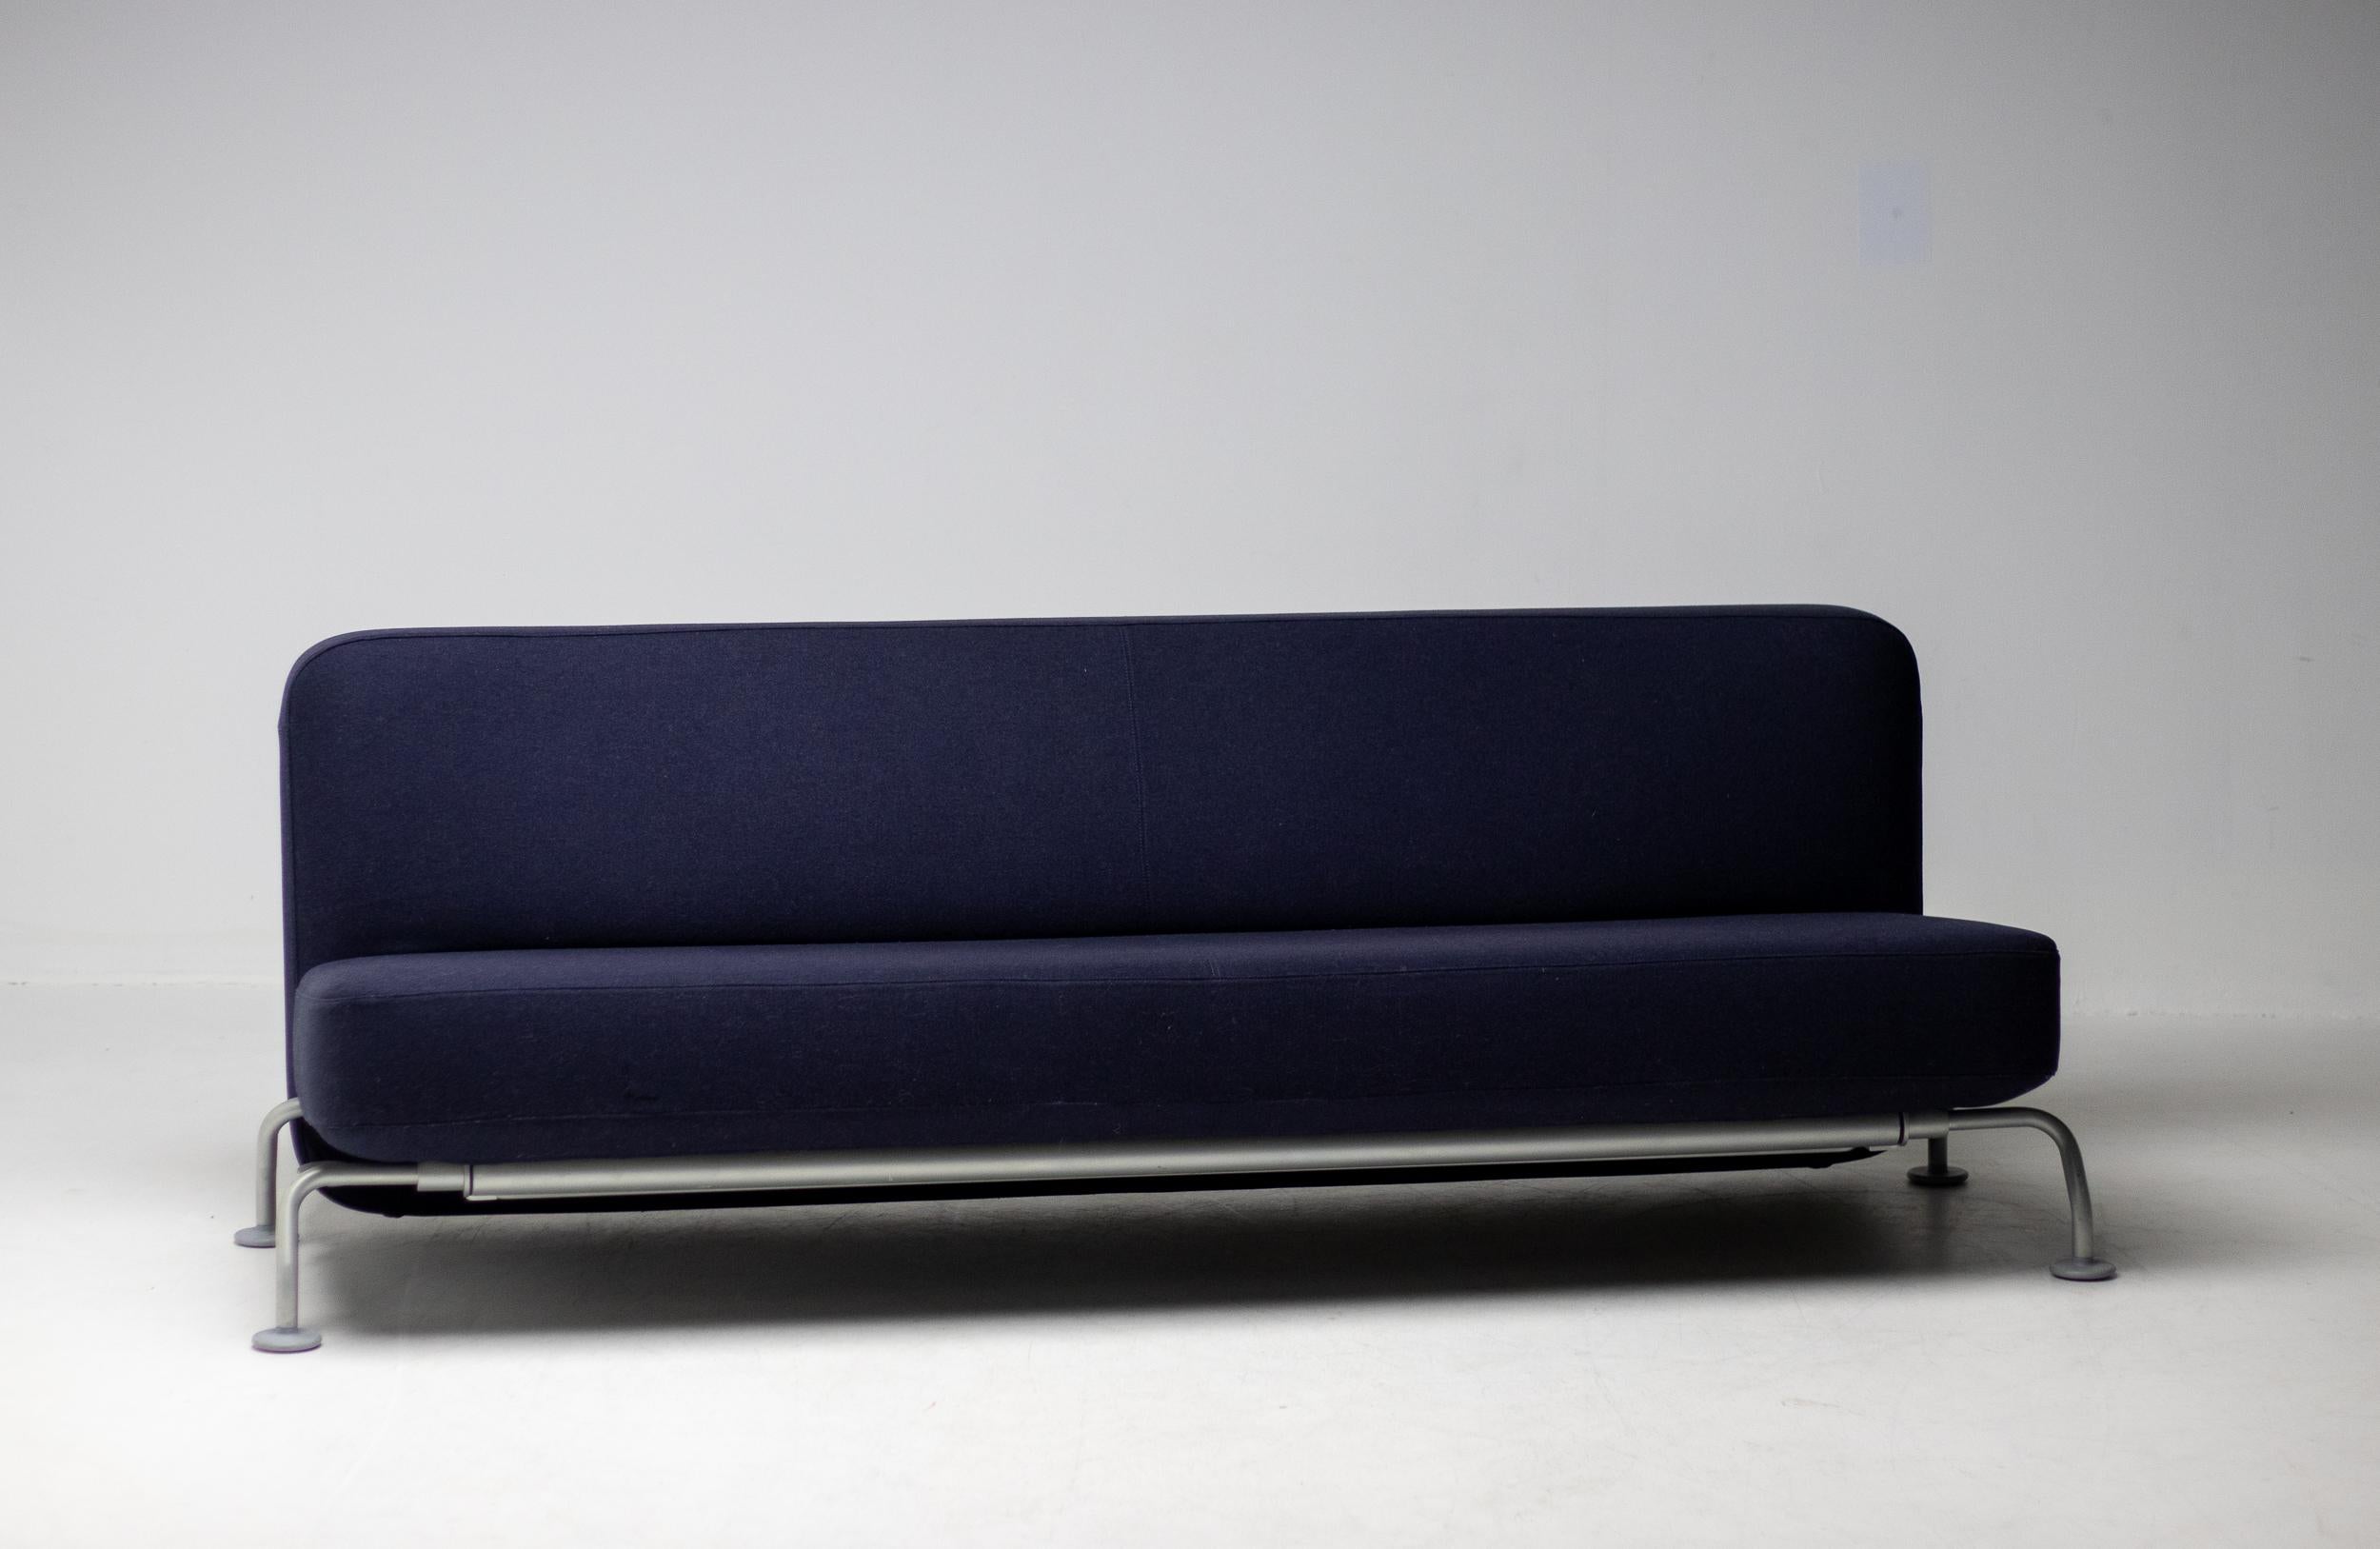 Modern B&B Italia Lunar Folding Sofa / Daybed by James Irvine